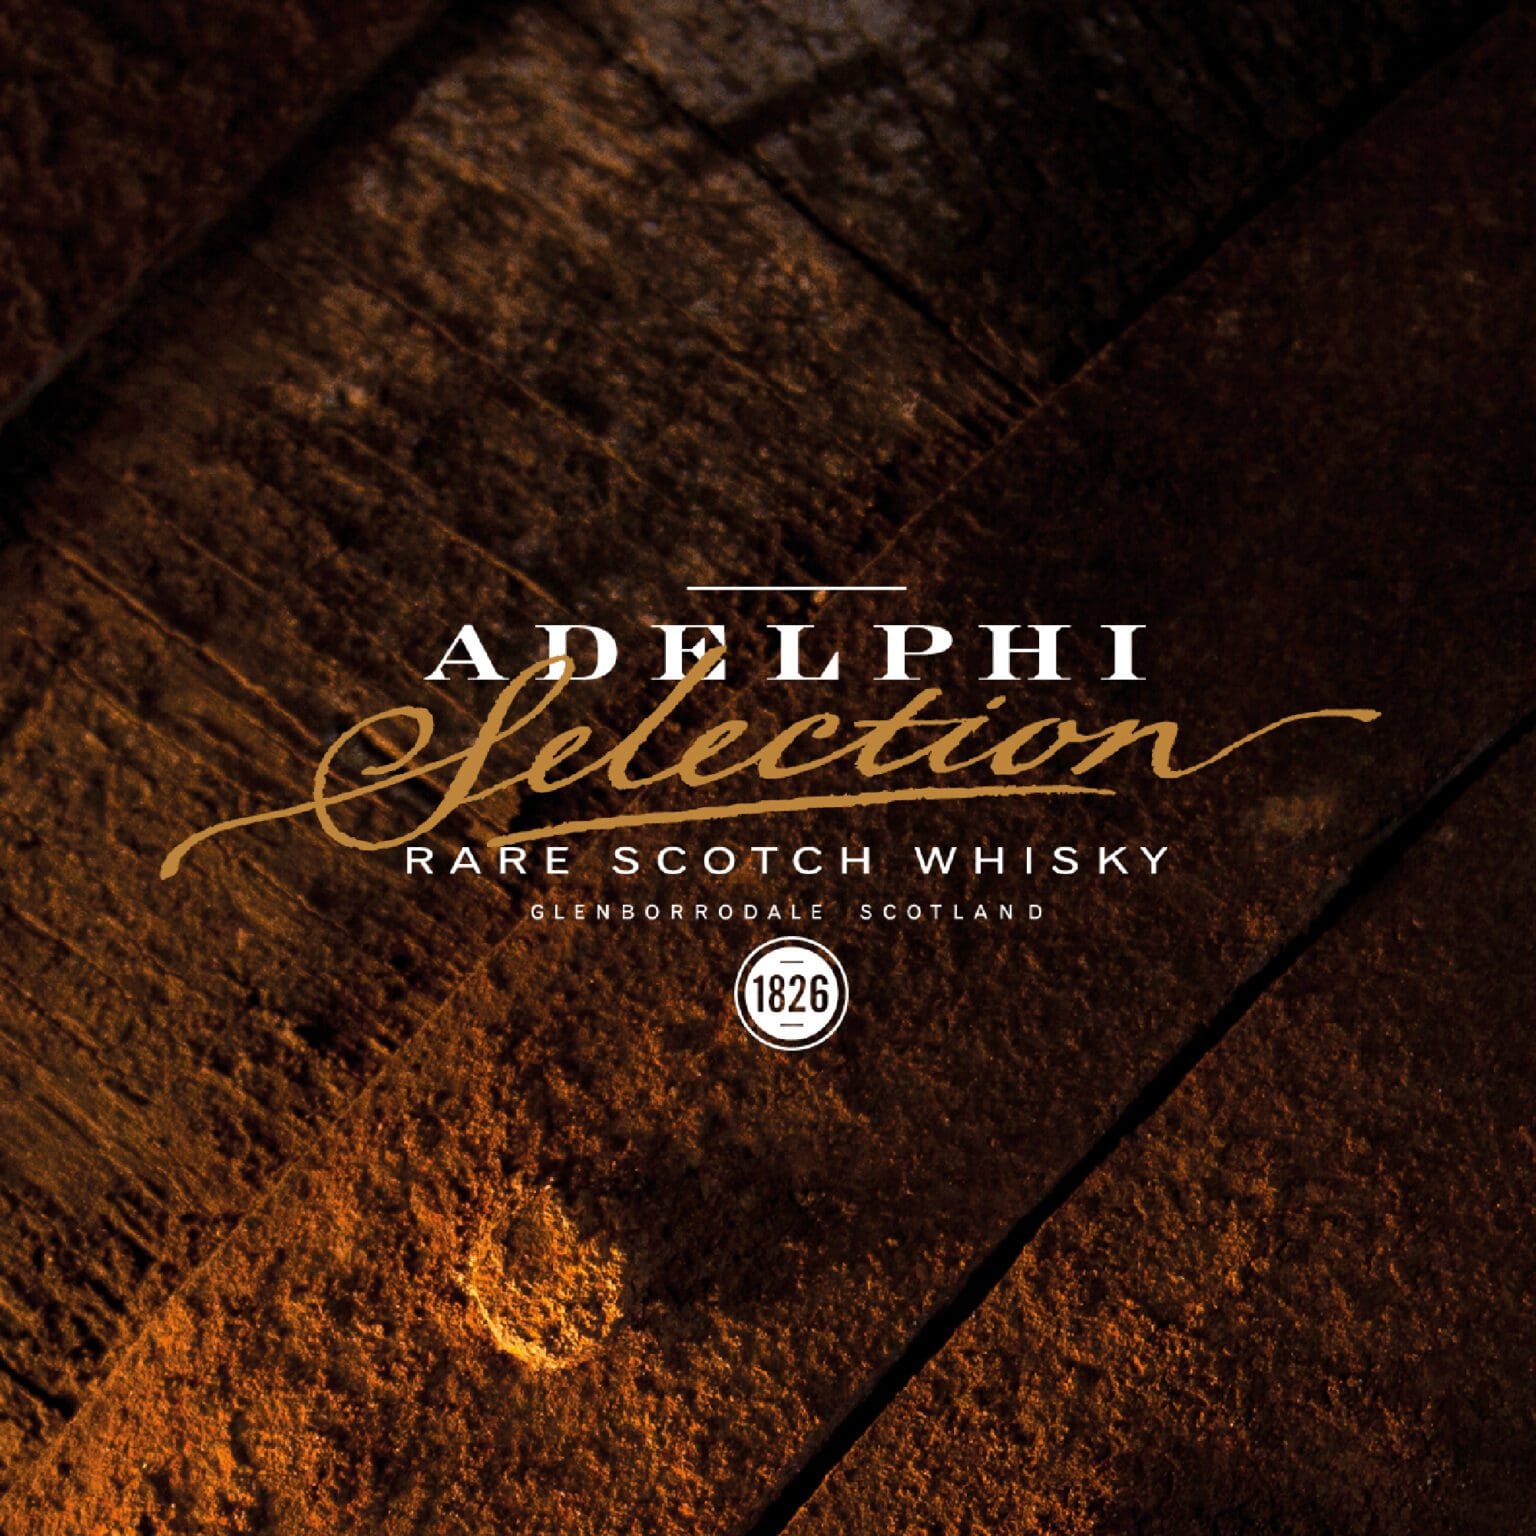 Adelphi Selection branding by Bluestone98